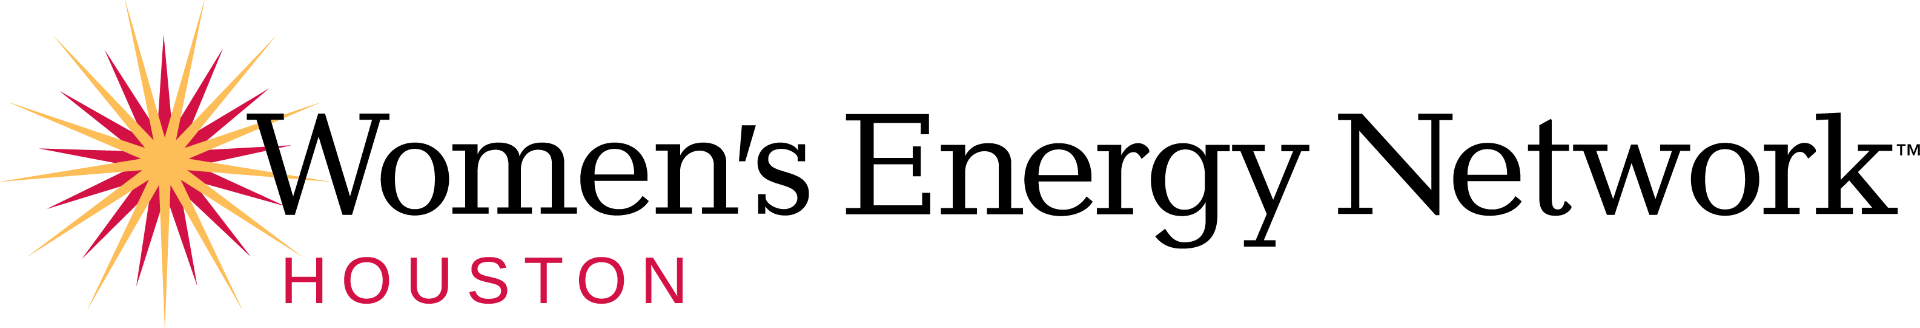 wenhouston-logo